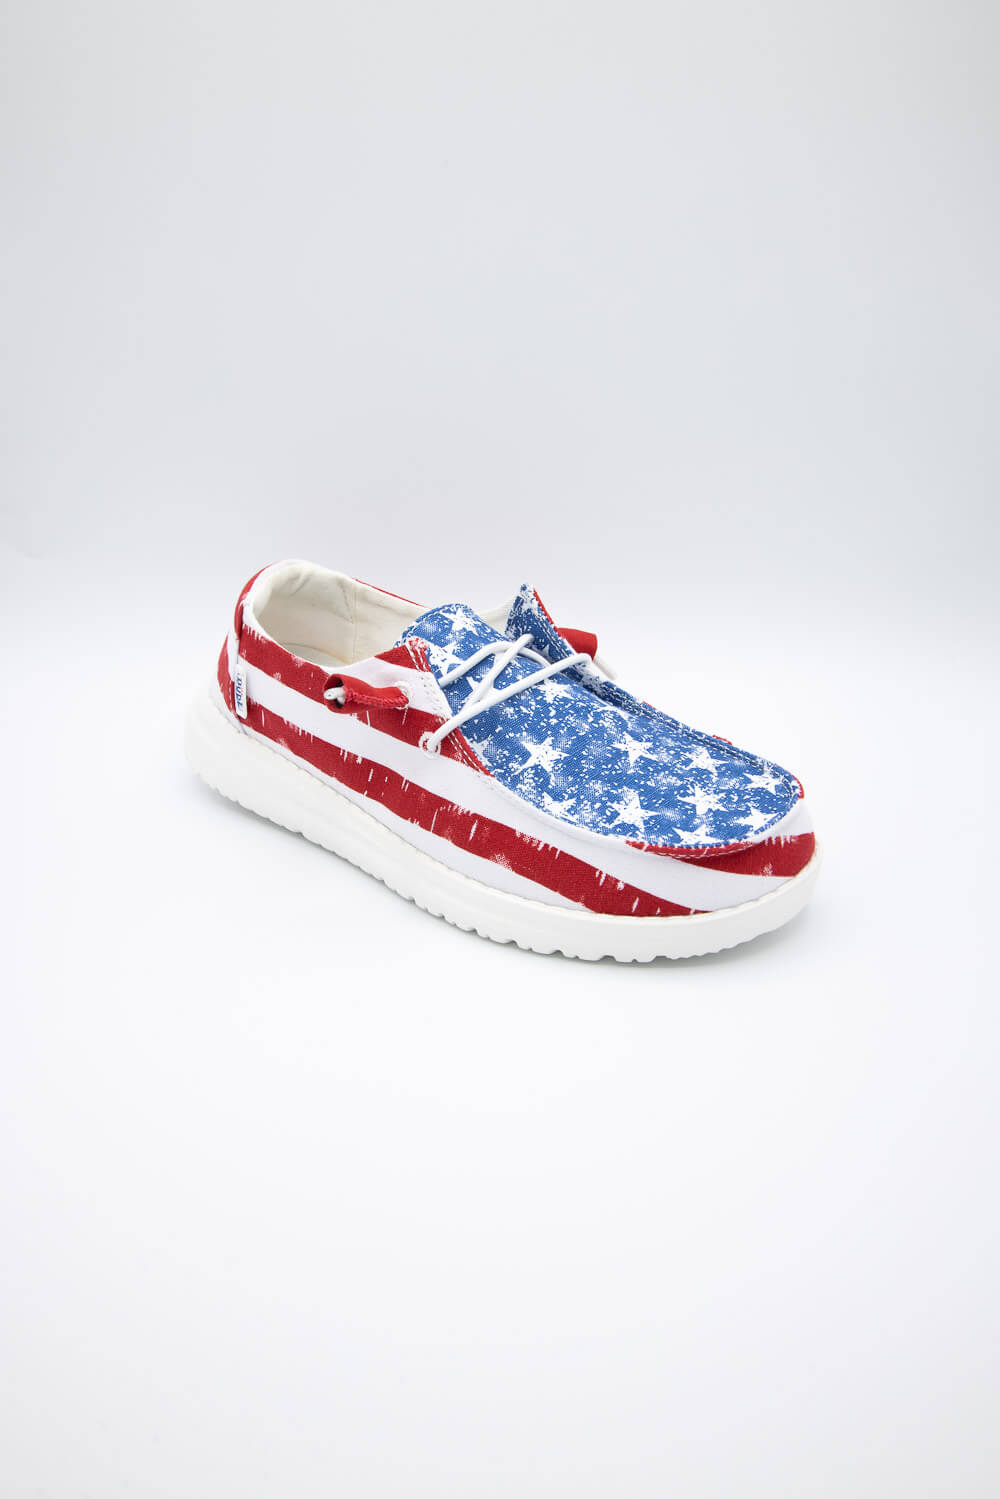 HEYDUDE Women's Wendy Patriotic Shoes in Star Spangled